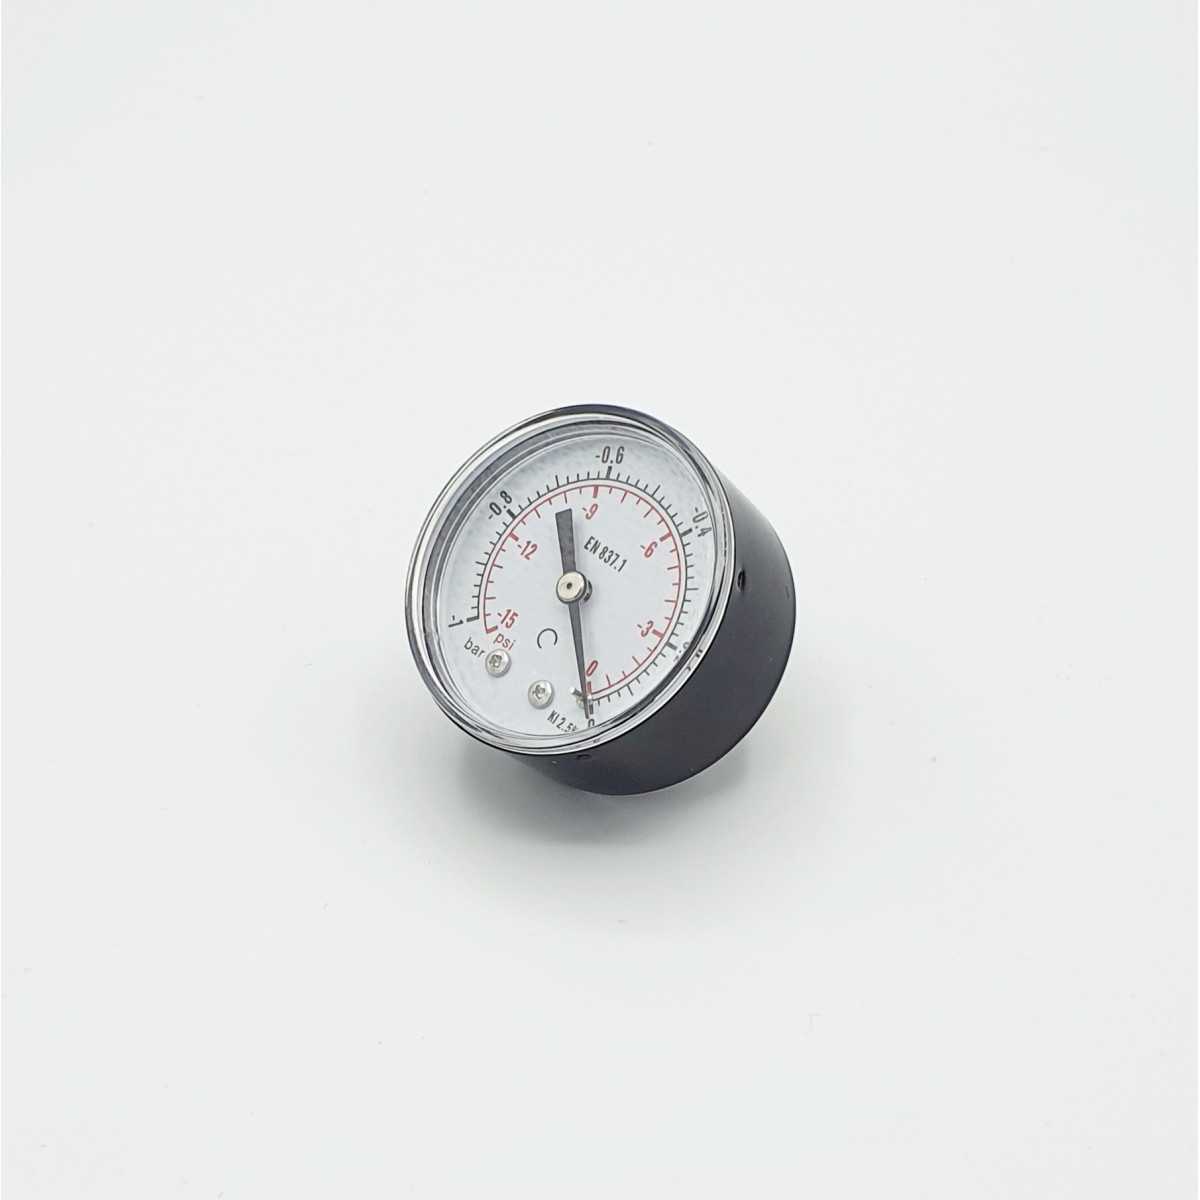 Vacuum gauge DM40 G 1/8" H | Beta Online Shop